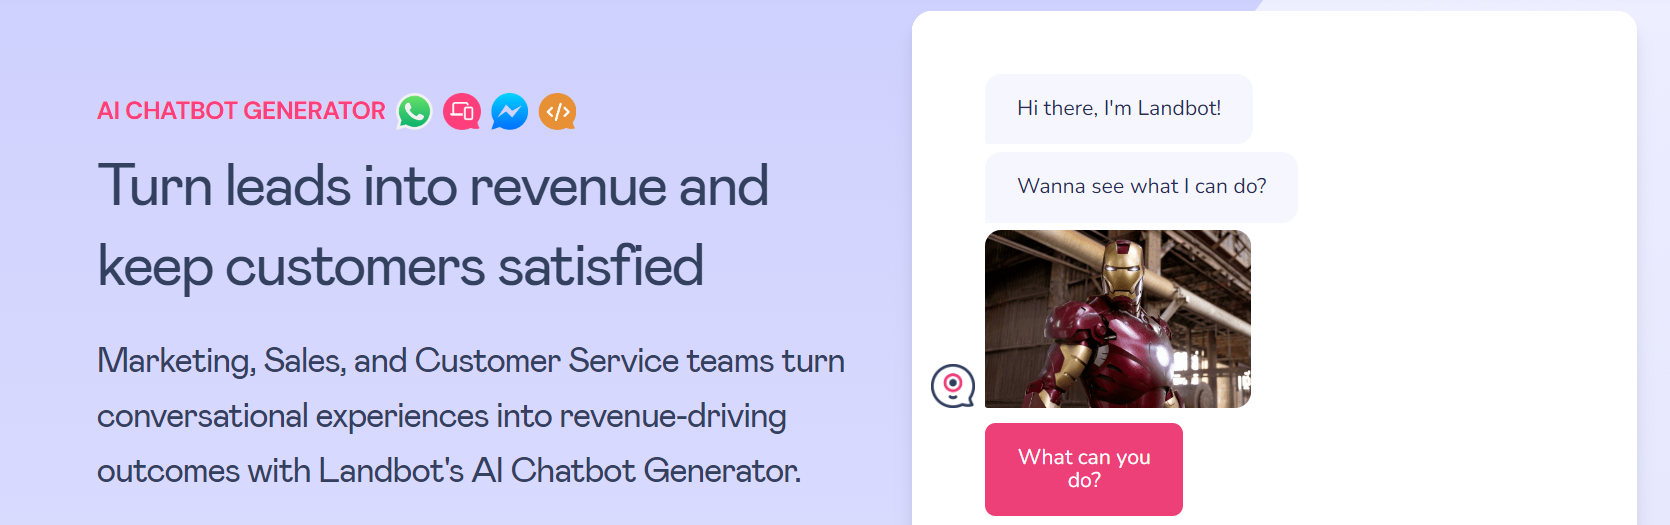 landbot Lead Generation Chatbot example